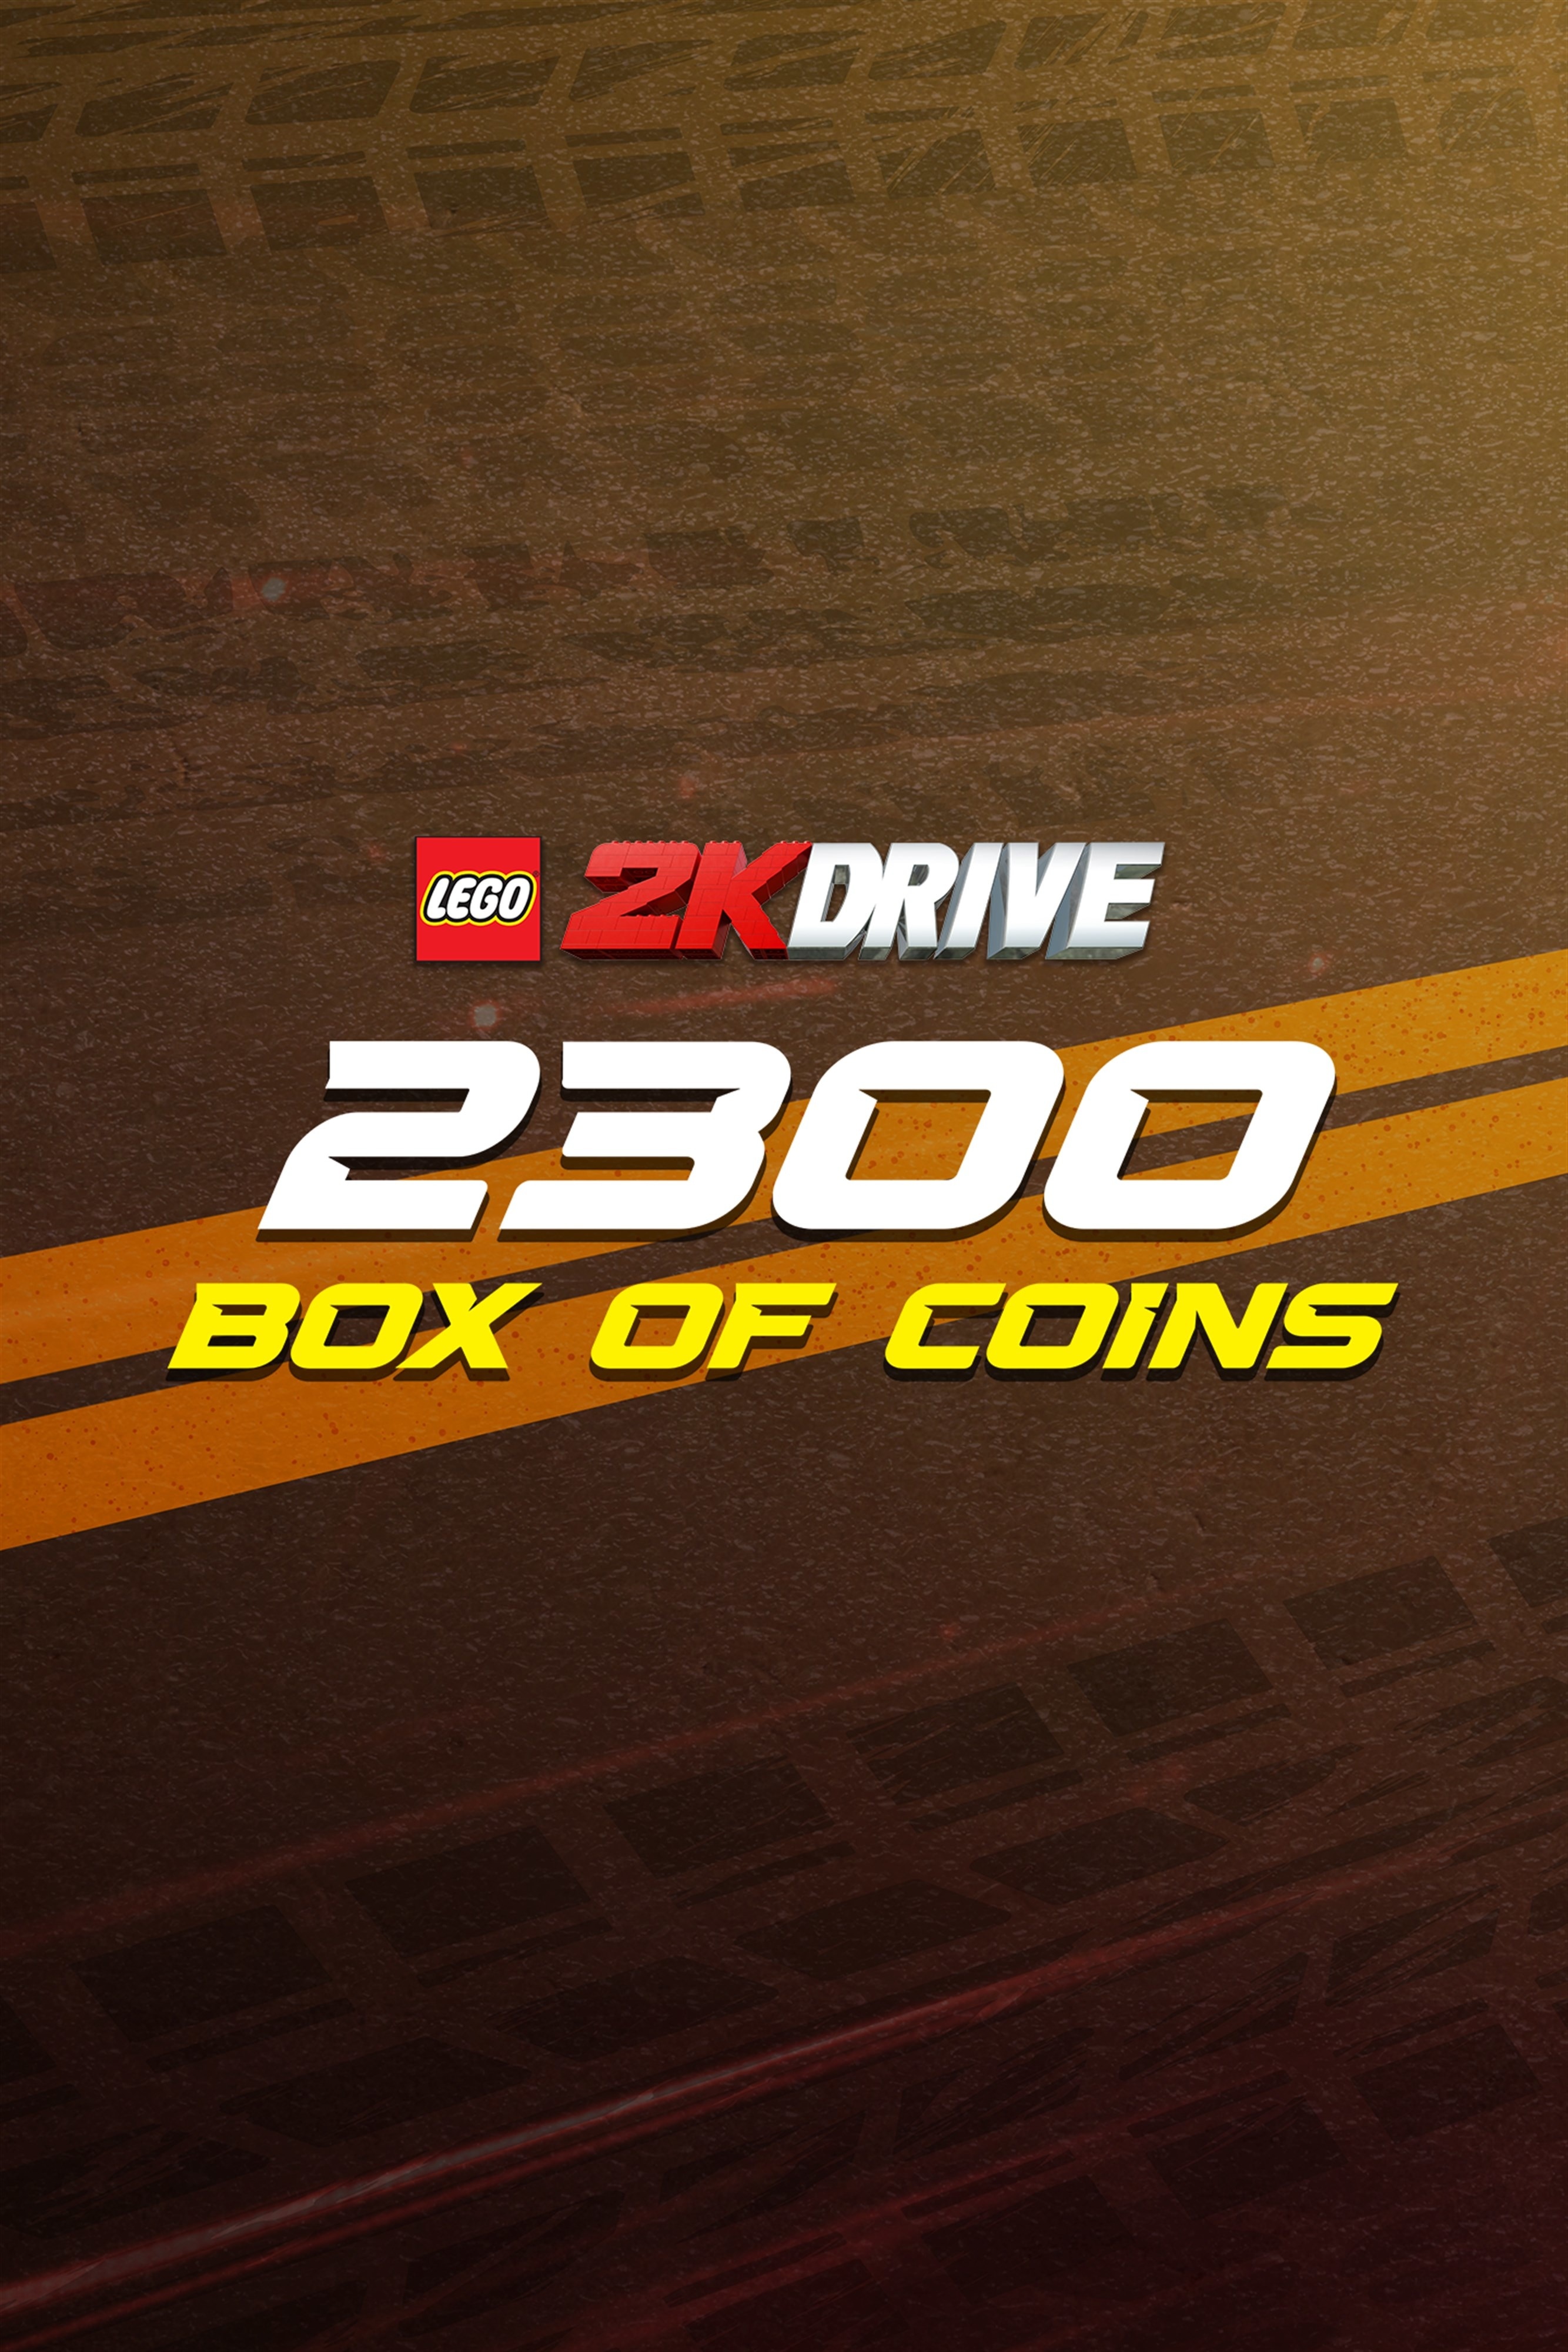 Xbox LEGO 2K Drive Box of Coins Download Code (Xbox) zum Sofortdownload